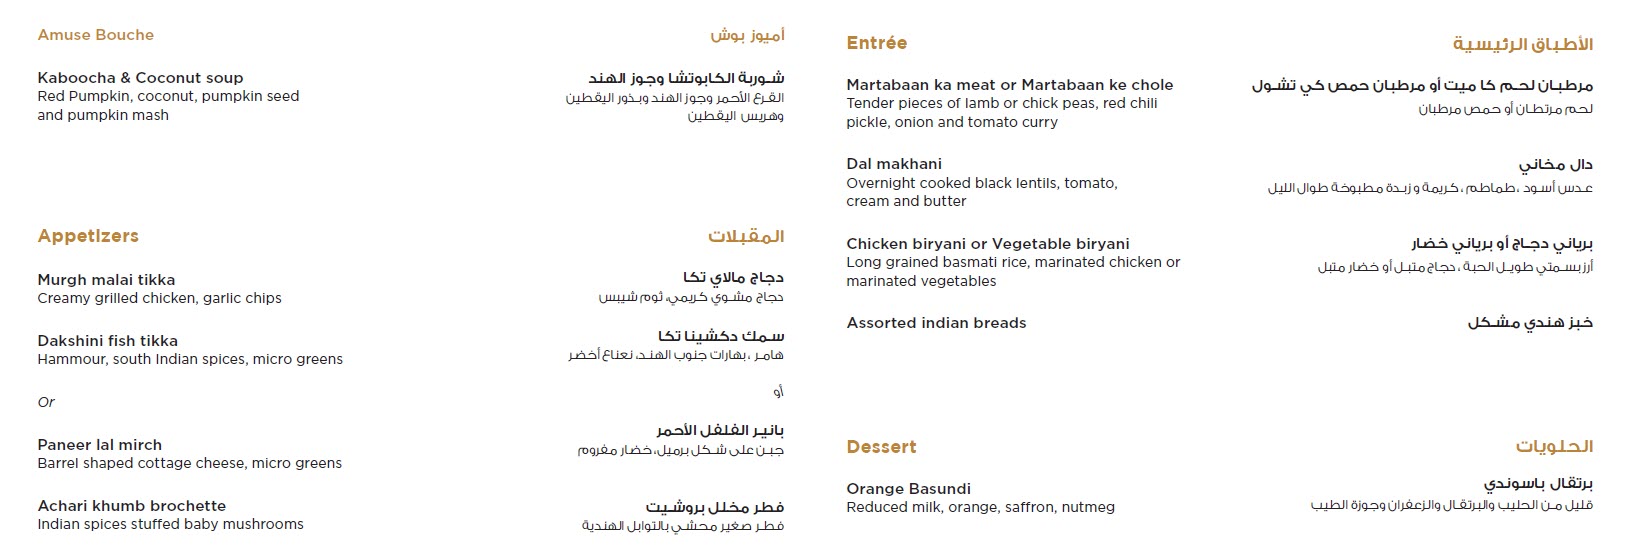 Luxury Abu Dhabi City Tour + Lunch at Emirates Palace - From Dubai 